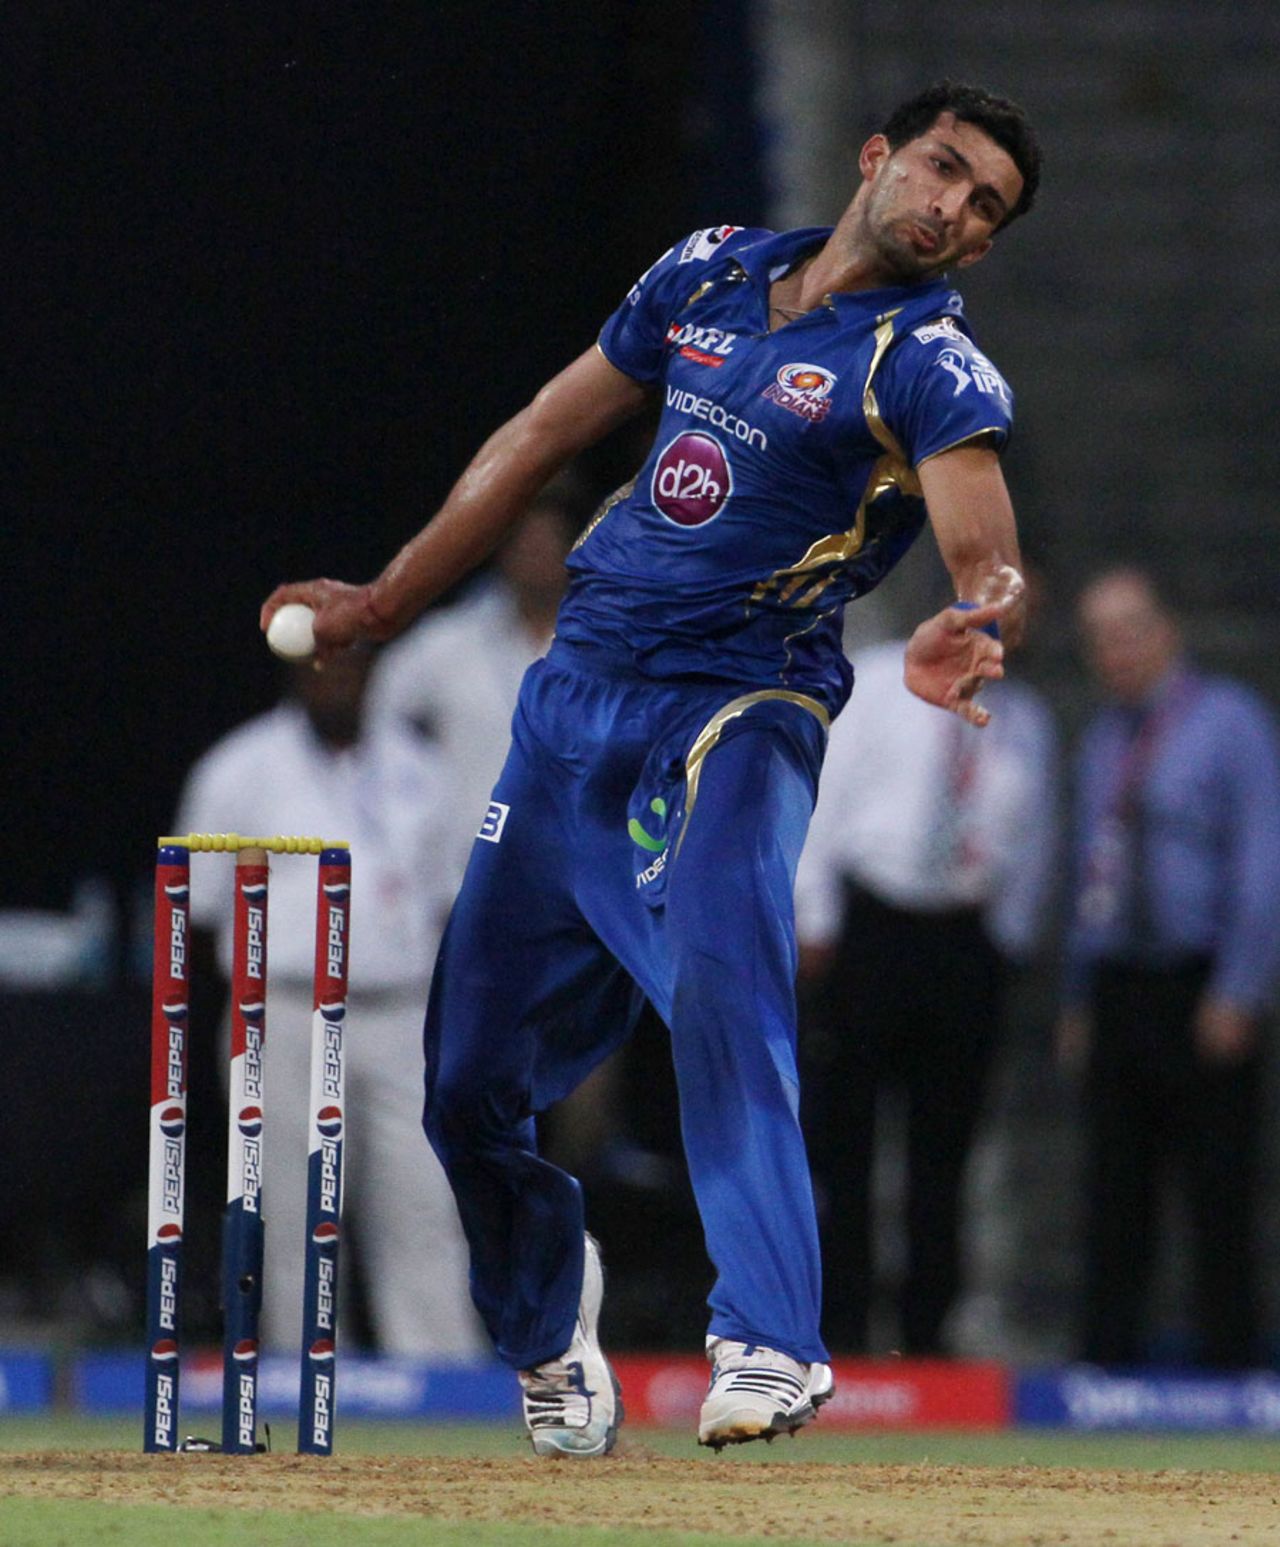 Rishi Dhawan in his delivery stride, Mumbai Indians v Pune Warriors, IPL 2013, Mumbai, April 13, 2013